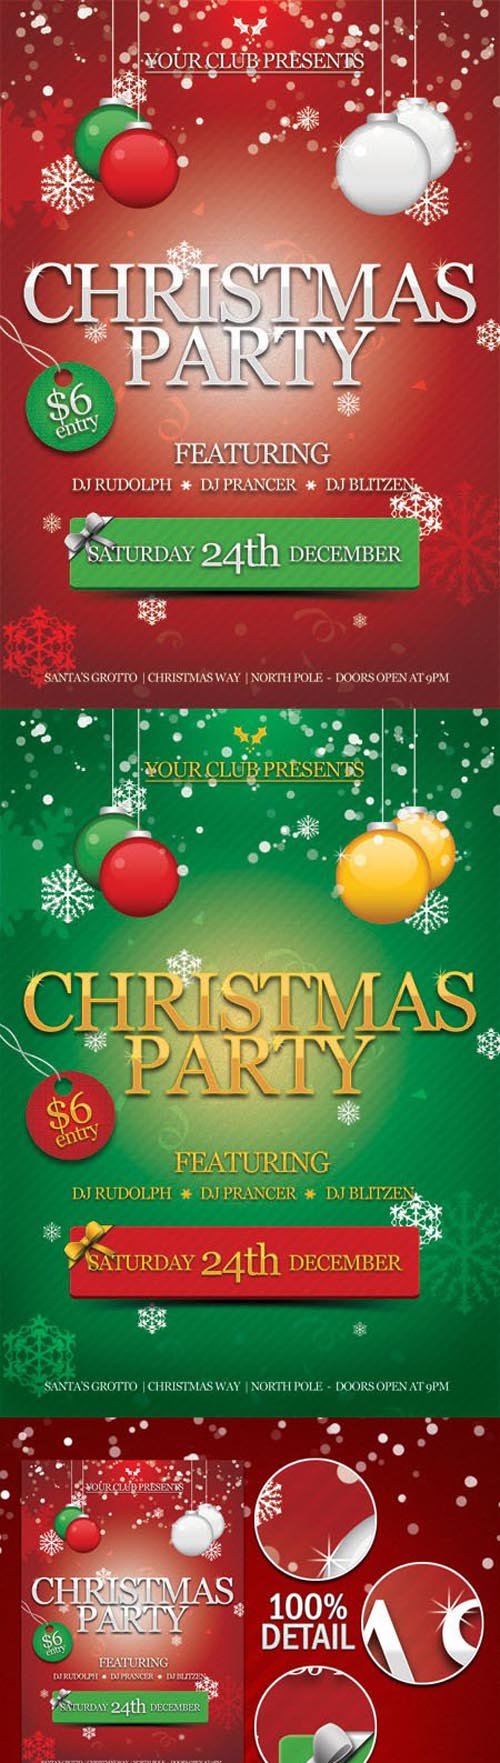 Christmas Party Flyer PSD Template + Christmas Tree PSD